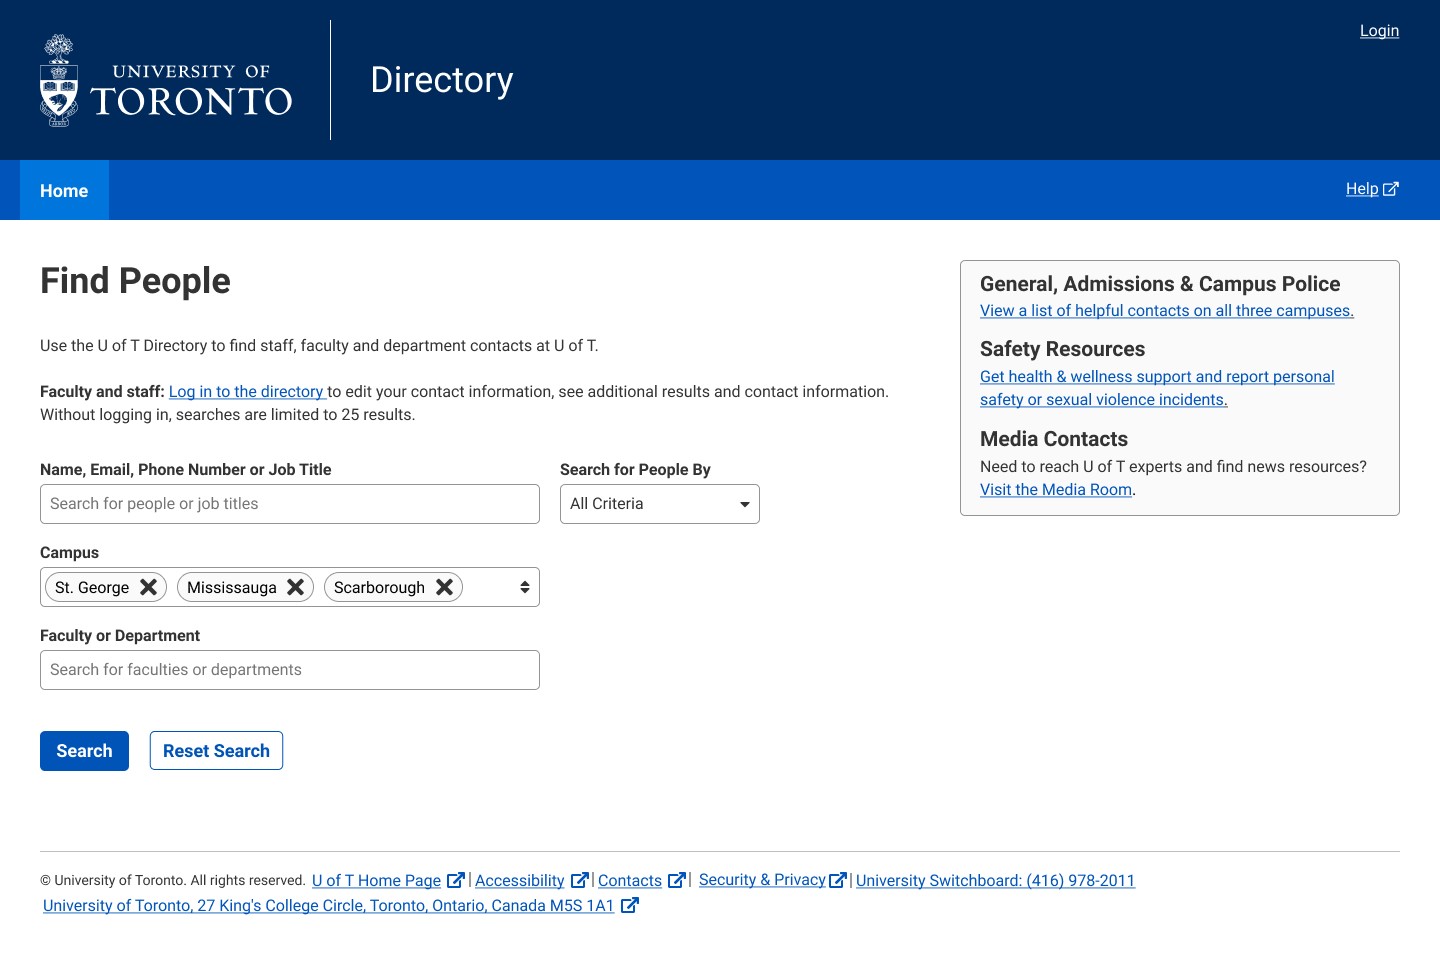 Screenshot of directory search capabilities